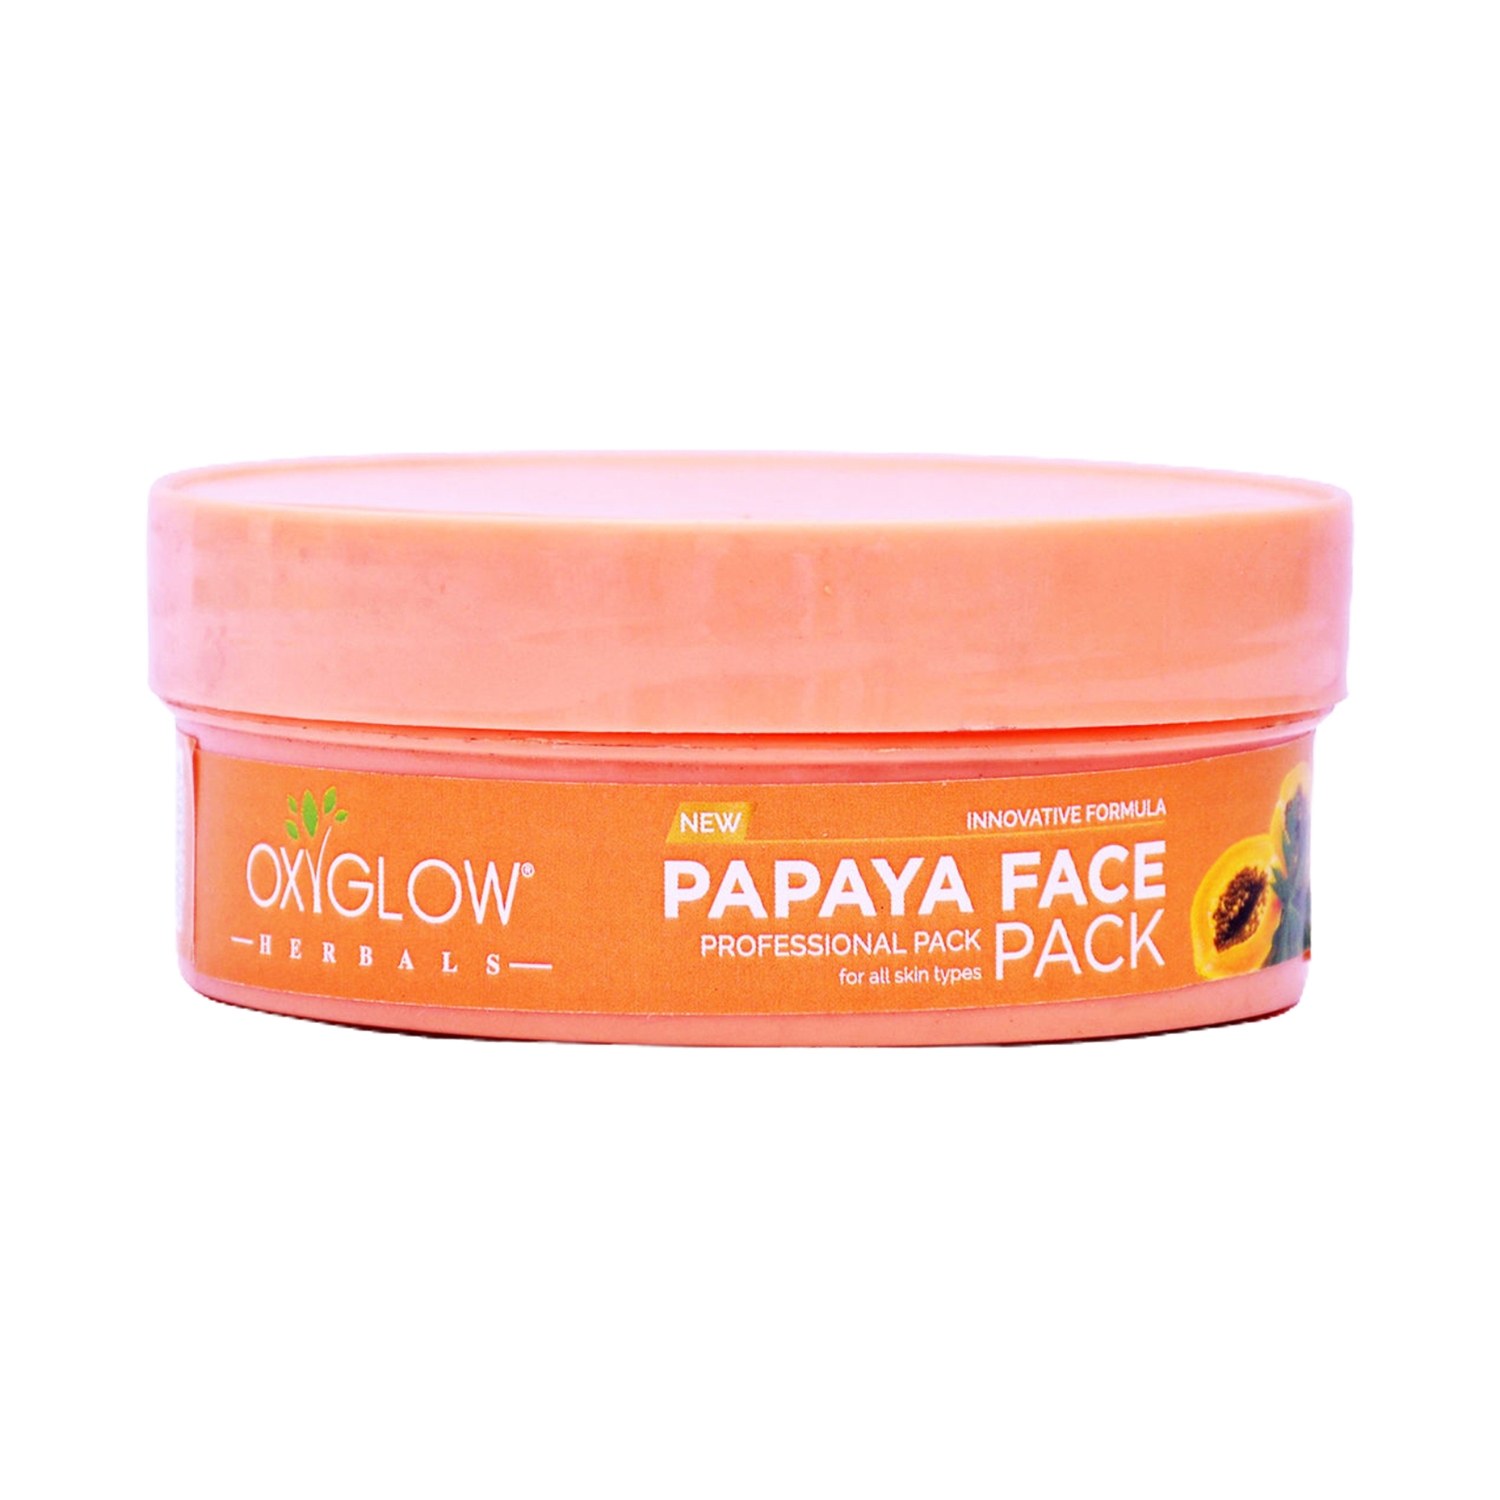 Oxyglow Papaya Face Pack (300g)